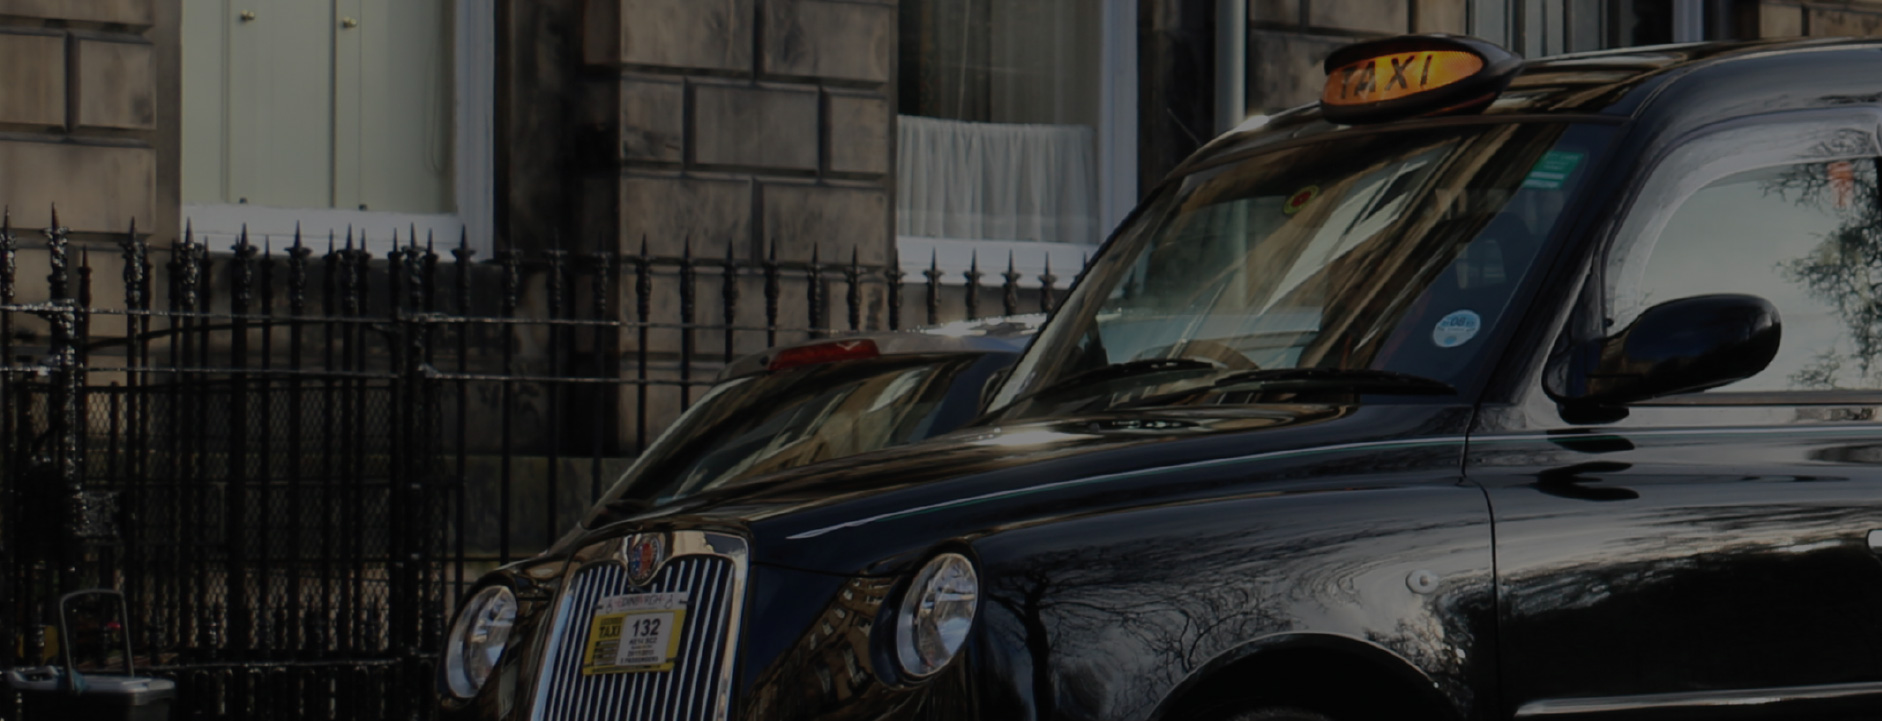 City Cabs Black Taxis Edinburgh. Call us on 0131 228 1211